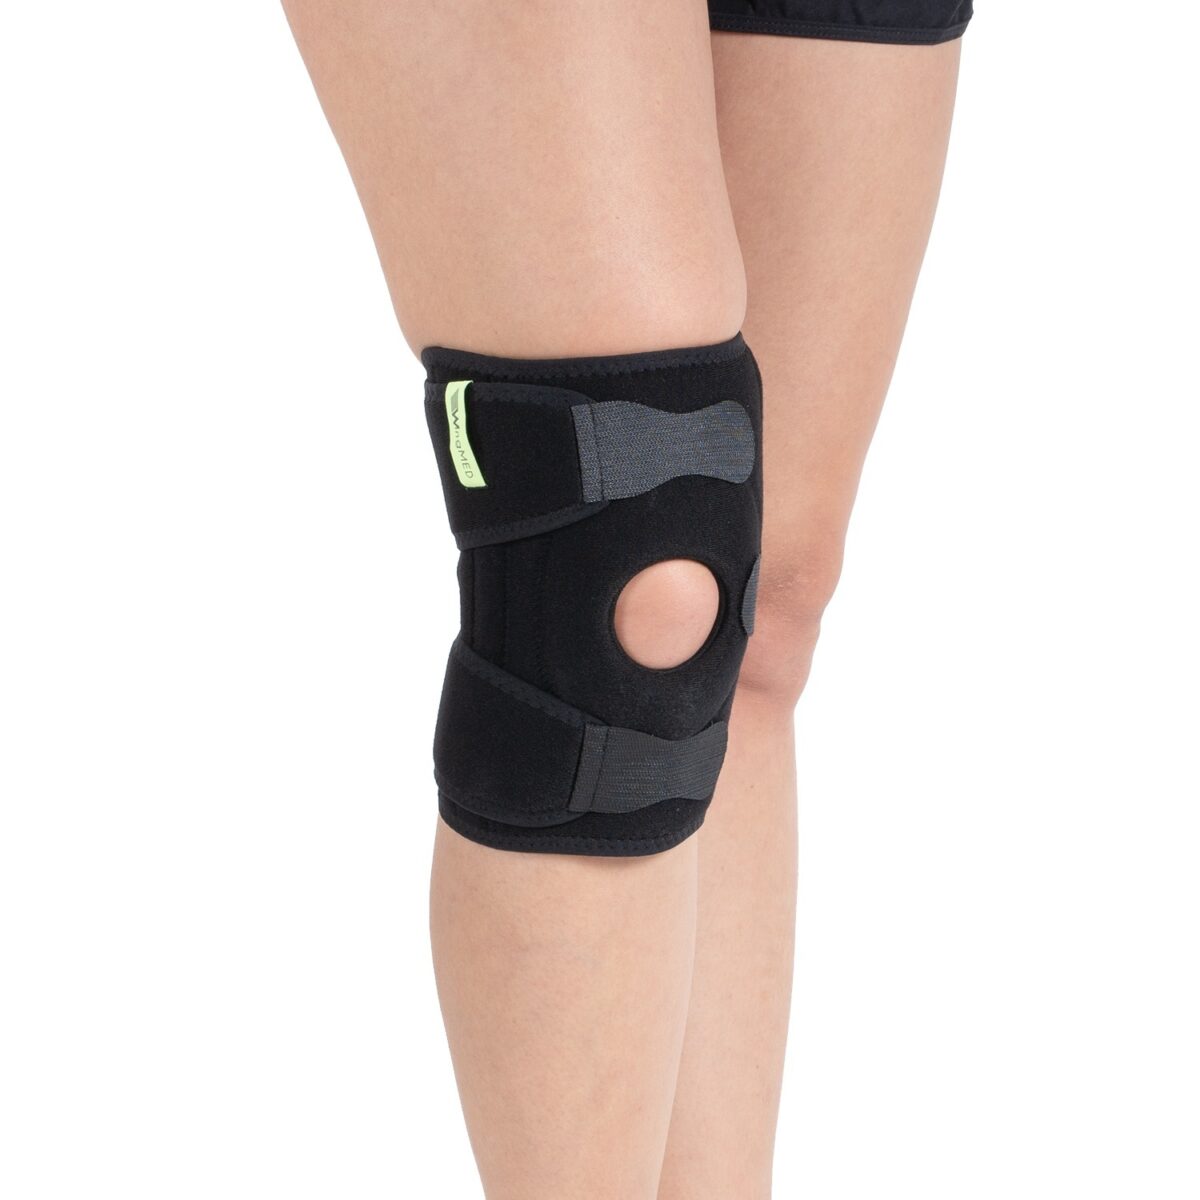 wingmed orthopedic equipments W508 ligament knee support short 33